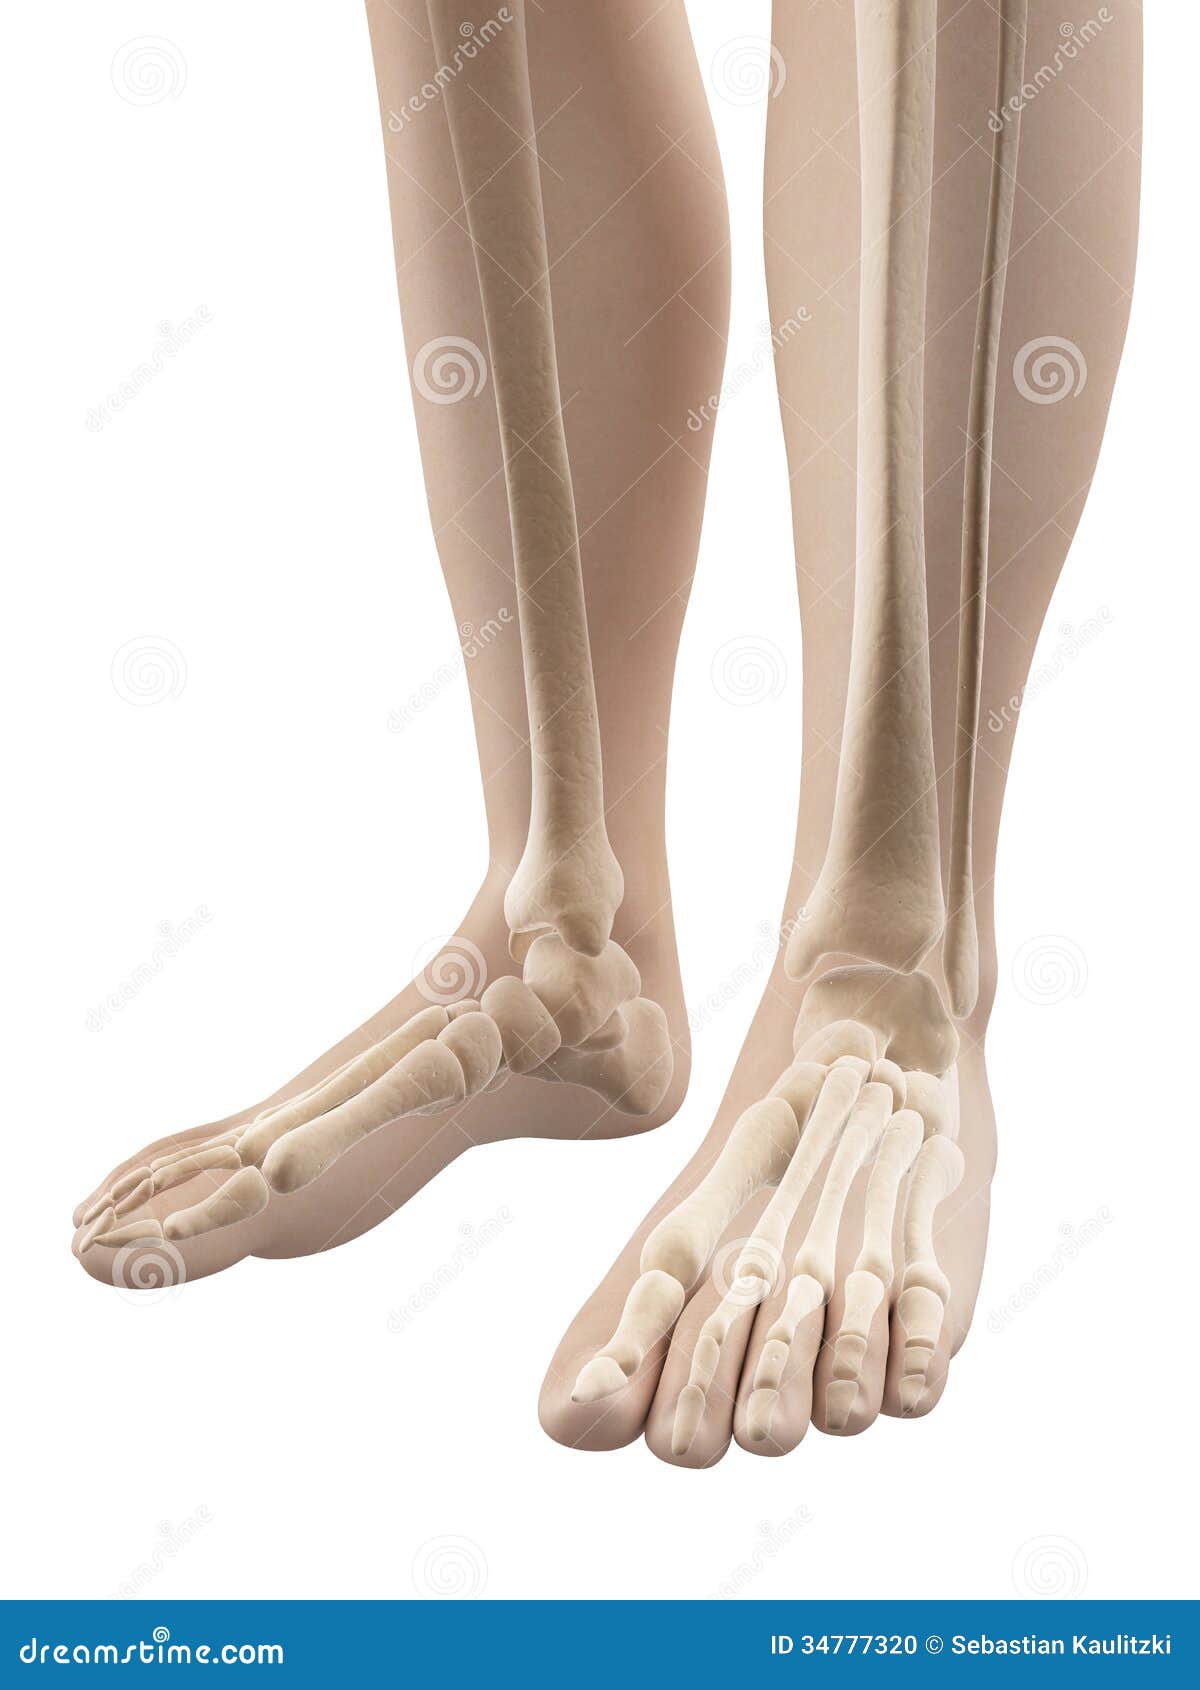 Foot - skeletal anatomy stock illustration. Illustration of medical